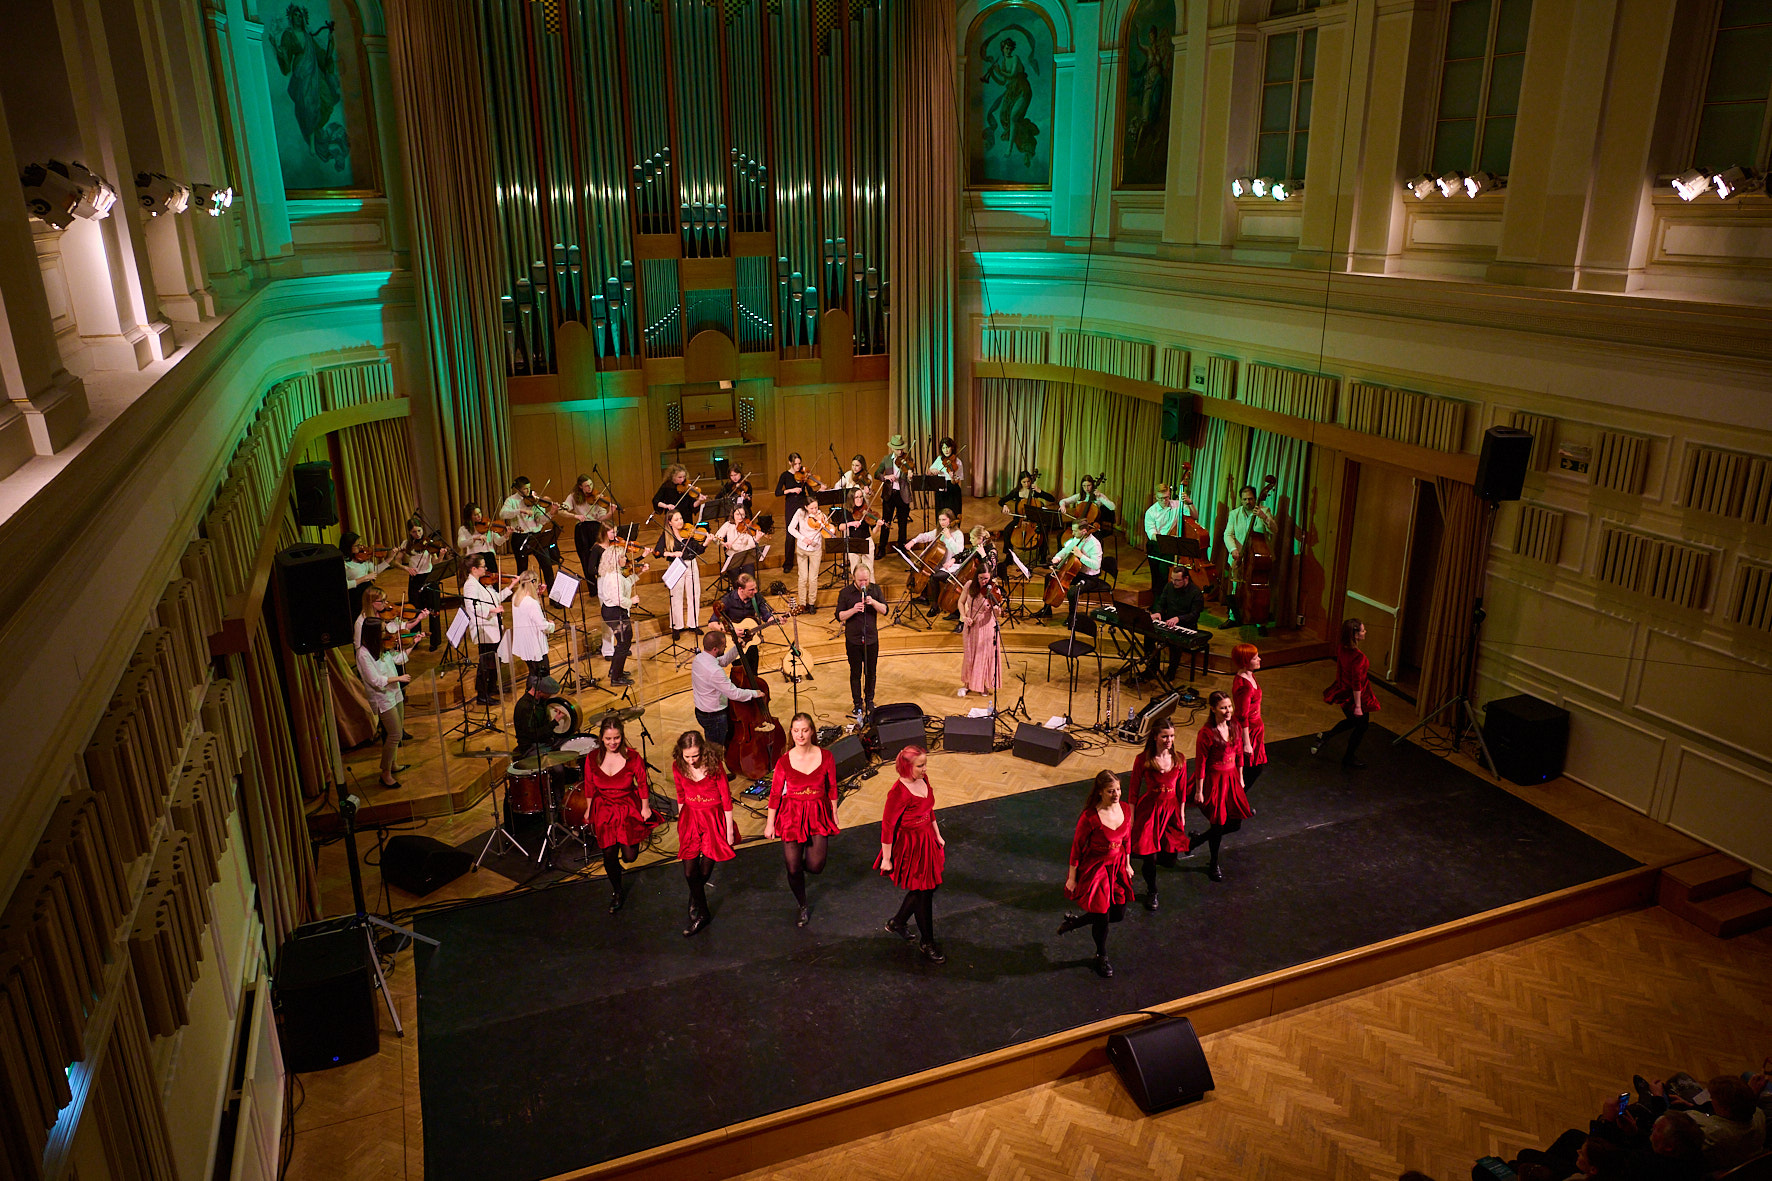 The Embassy presents Nova Keltika – Irish music and dance event in Slovenska Filharmonija